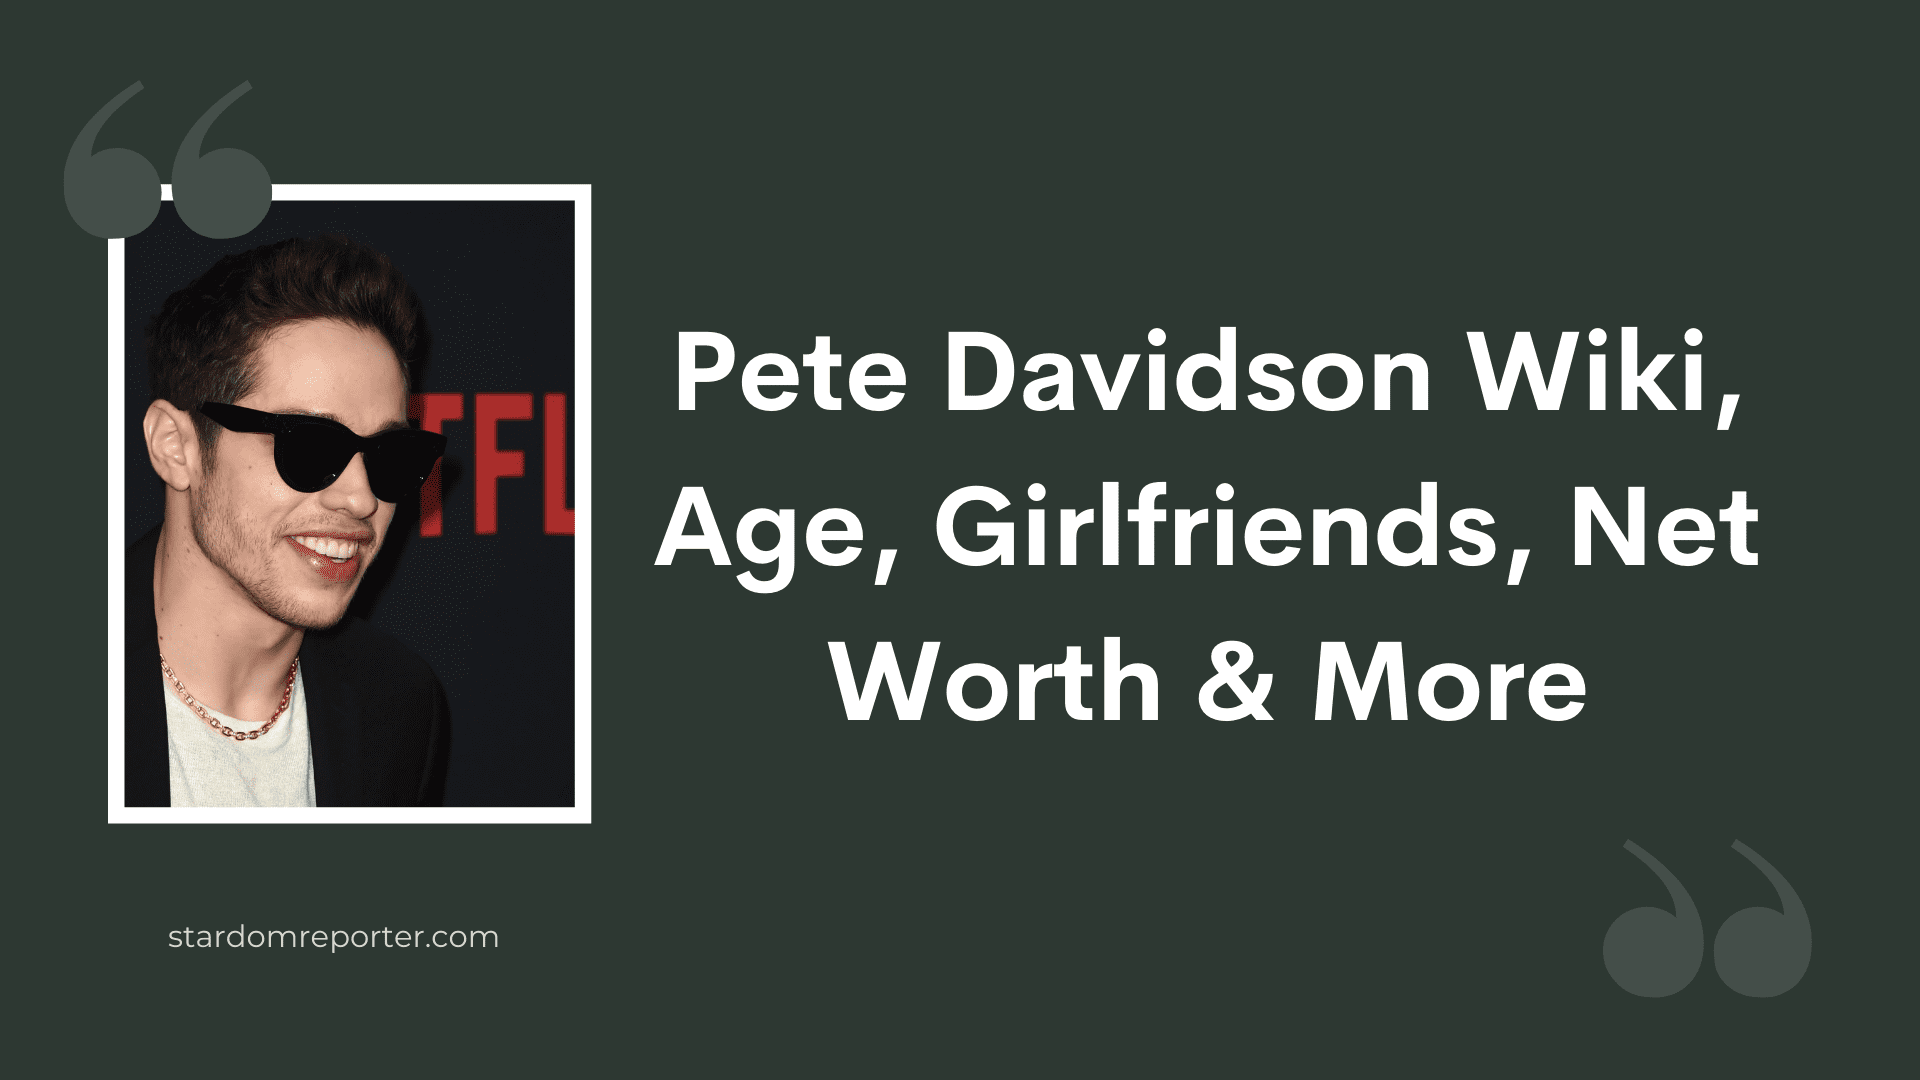 Pete Davidson Wiki, Age, Girlfriends, Net Worth & More - 28